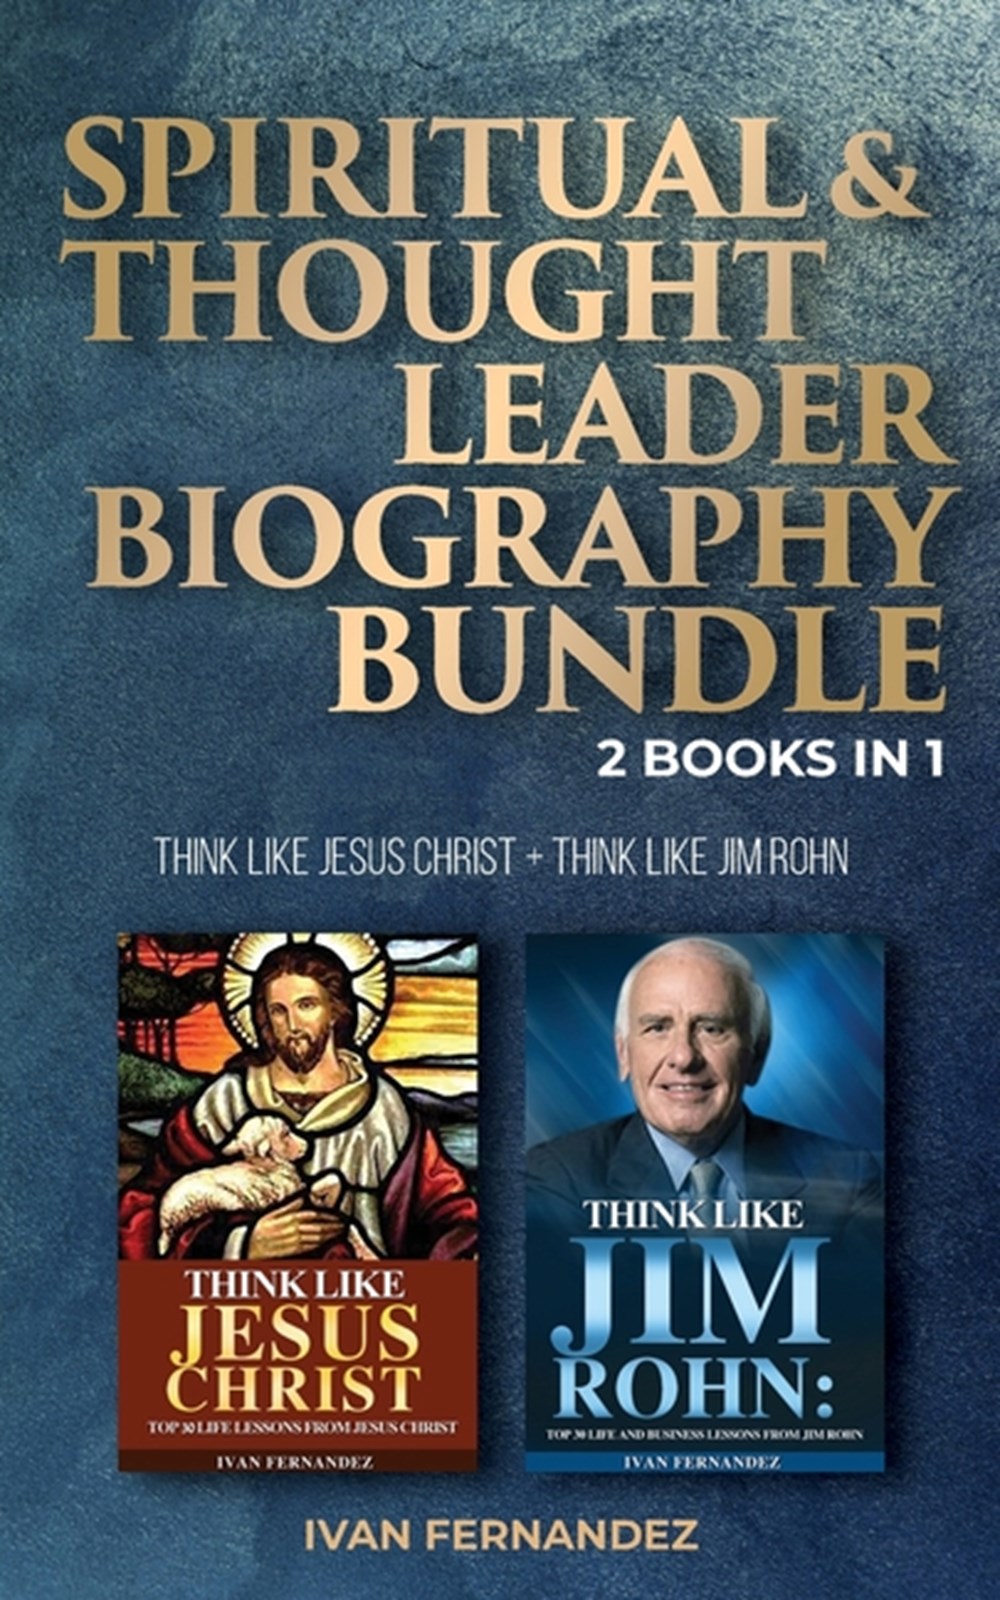 Spiritual & Thought Leader Biography Bundle 2 Books in 1: Think Like Jesus Christ + Think Like Jim R